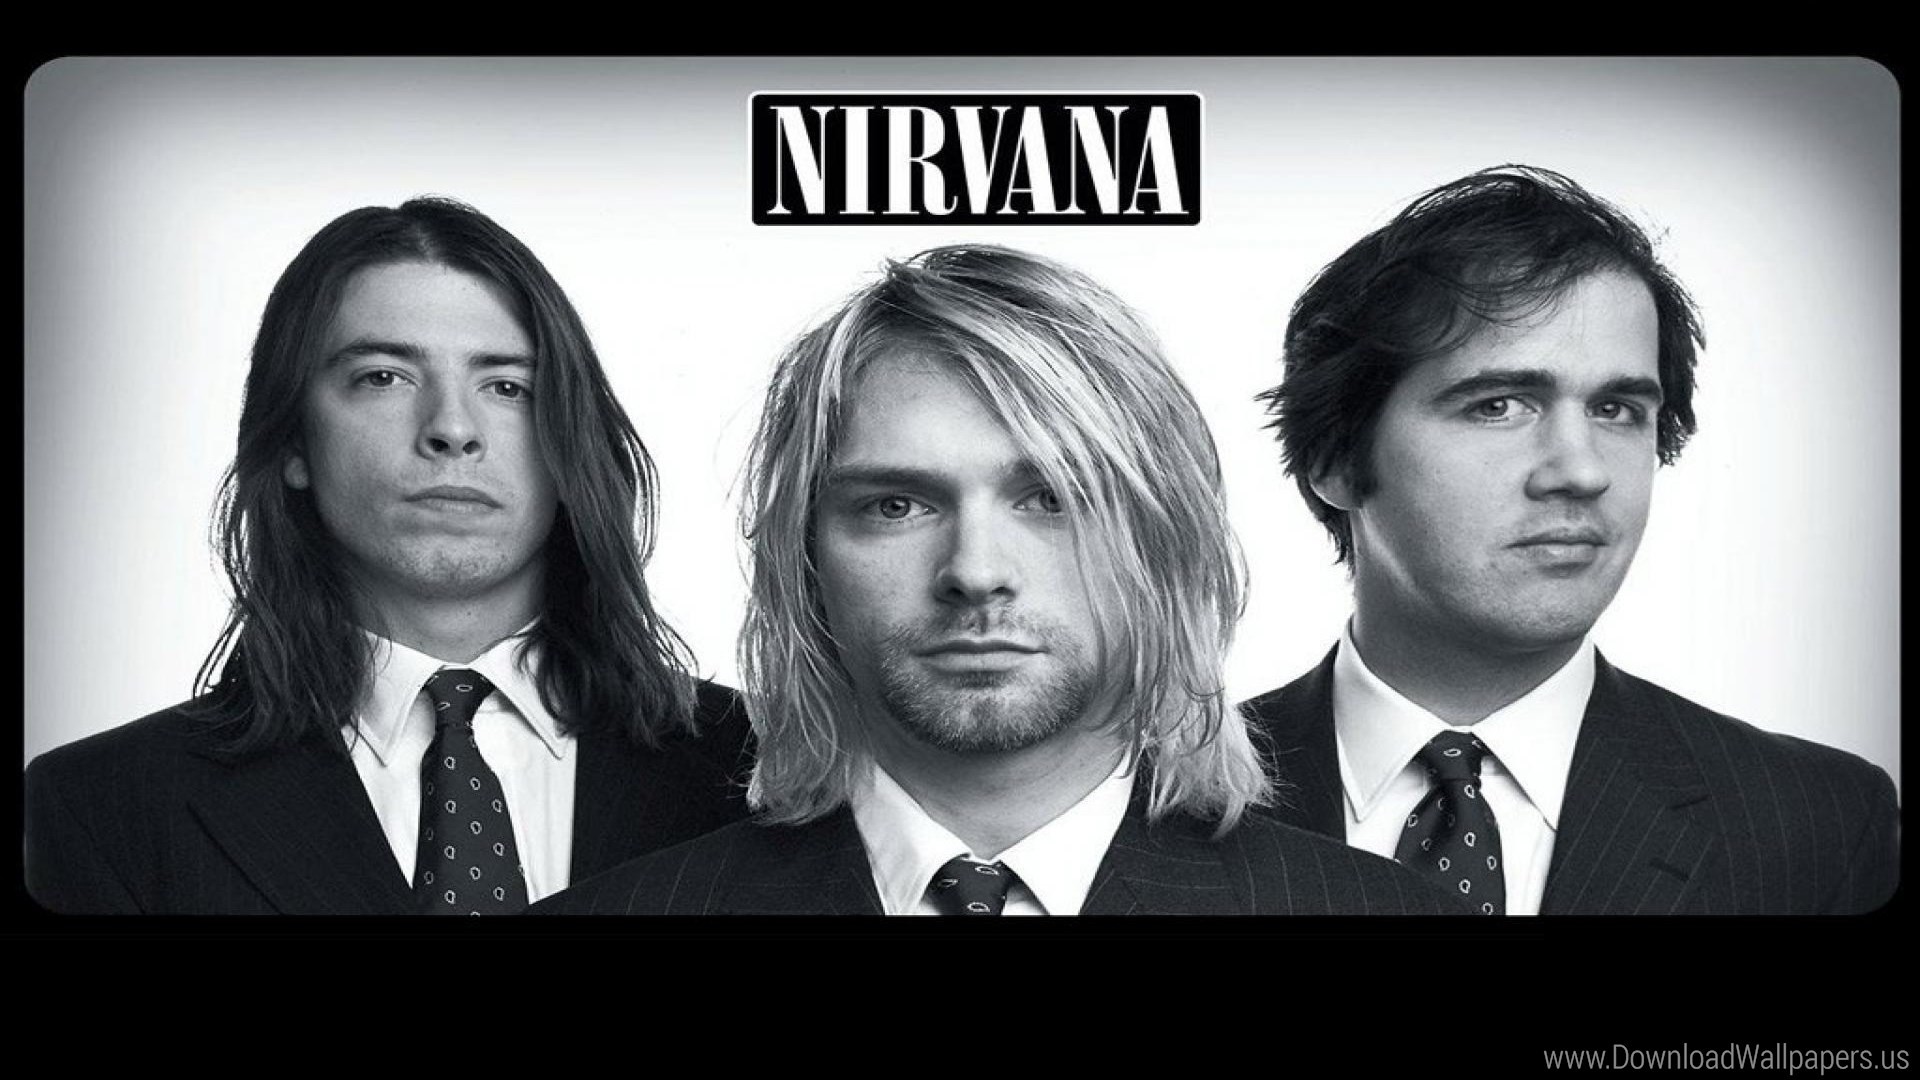 1920x1080 Download Widescreen 16:9  - Band, Look, Members, Nirvana, Suits  Wallpaper